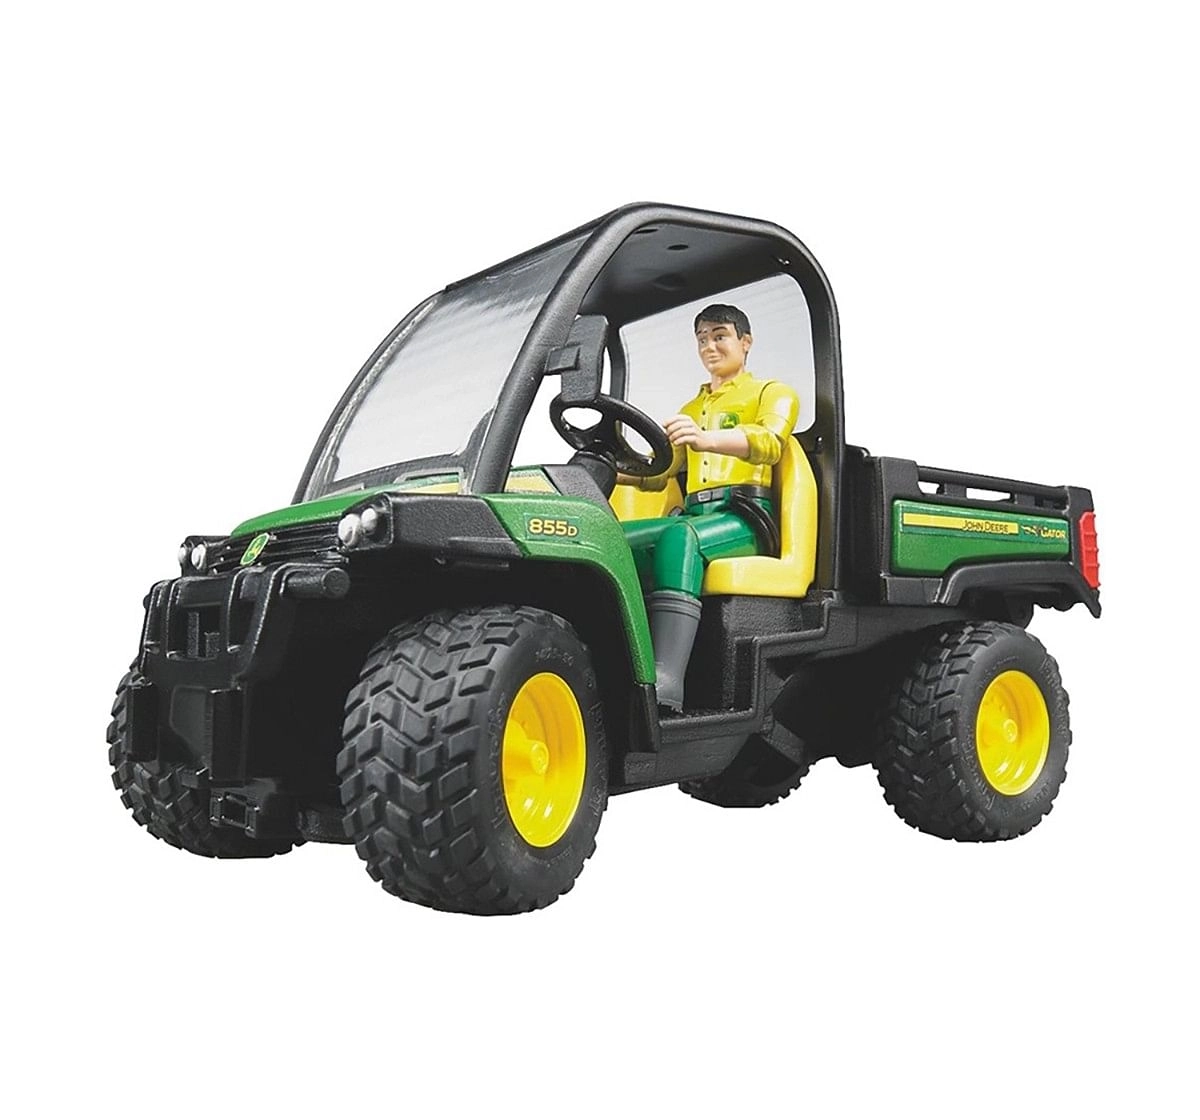 Bruder John Deere Gator XUV 855D with Driver Vehicles for Kids age 4Y+ 